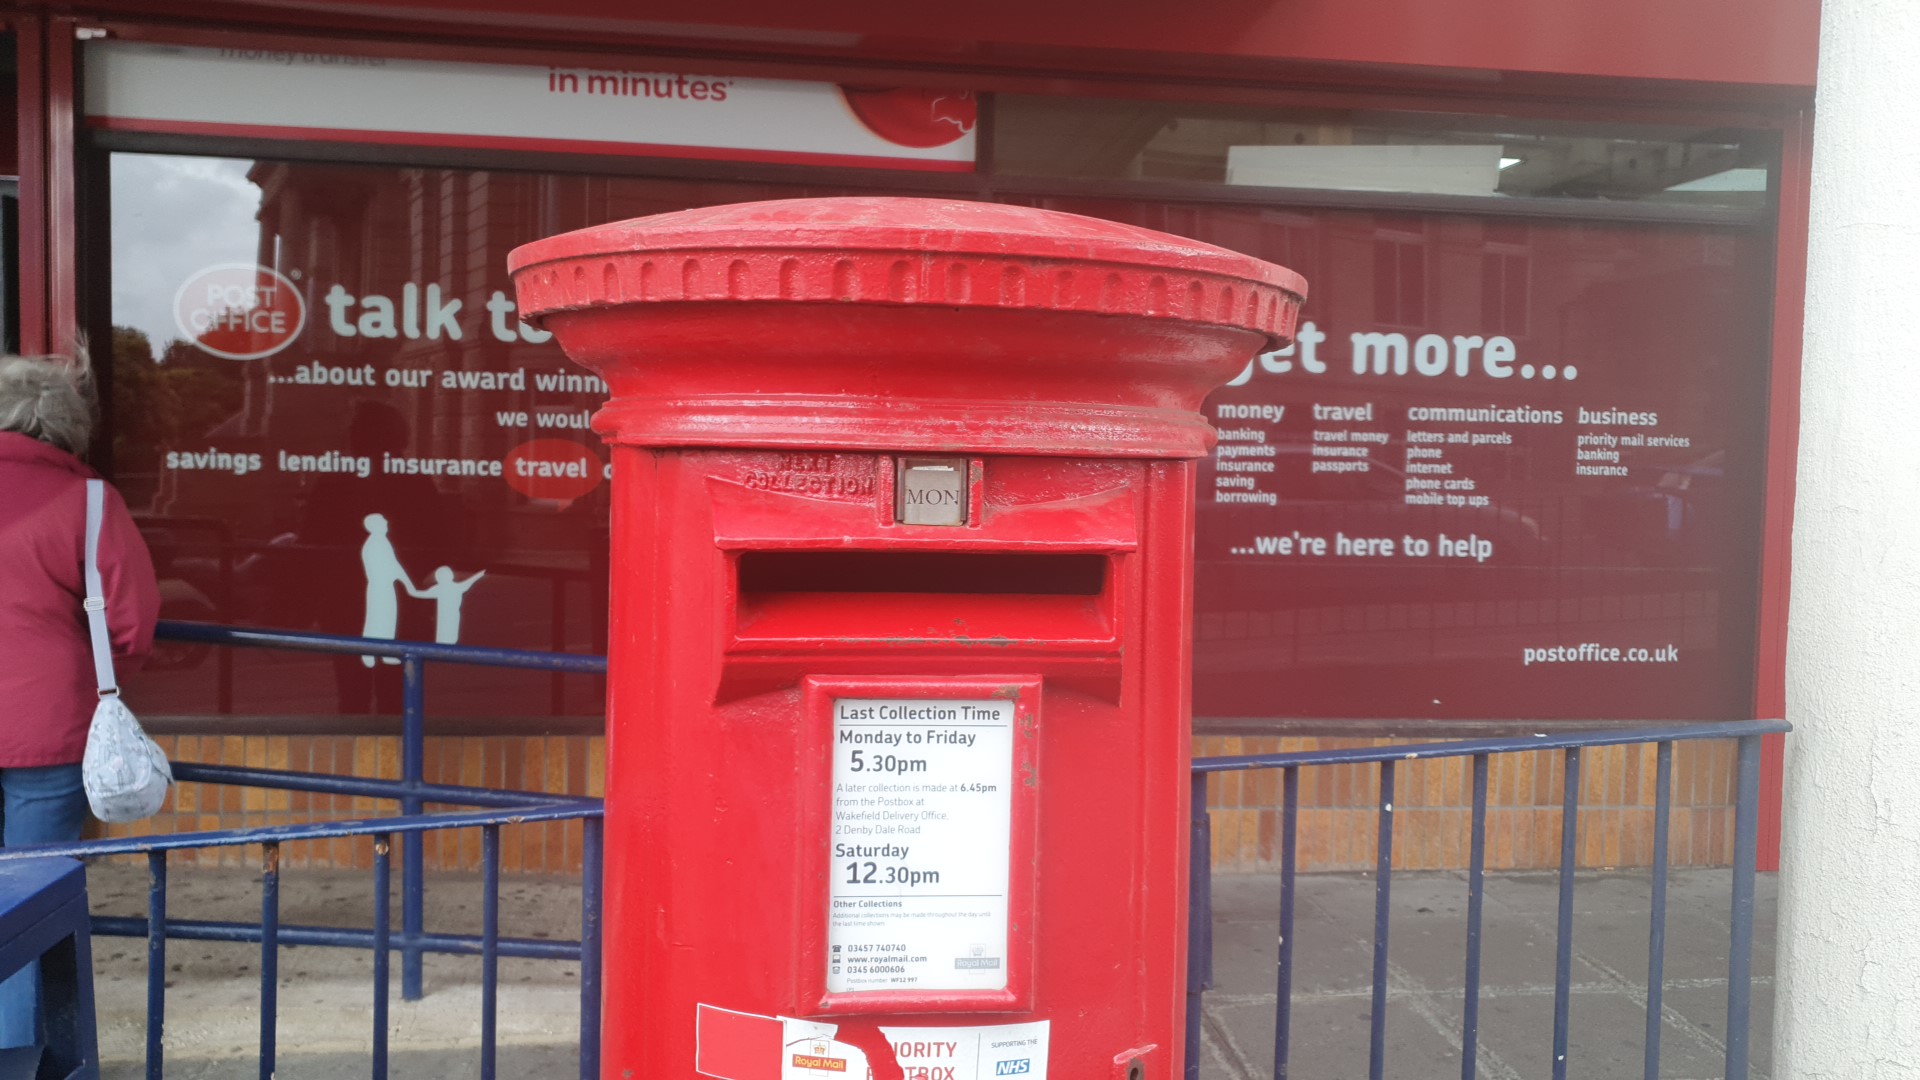 Dewsbury Post Office